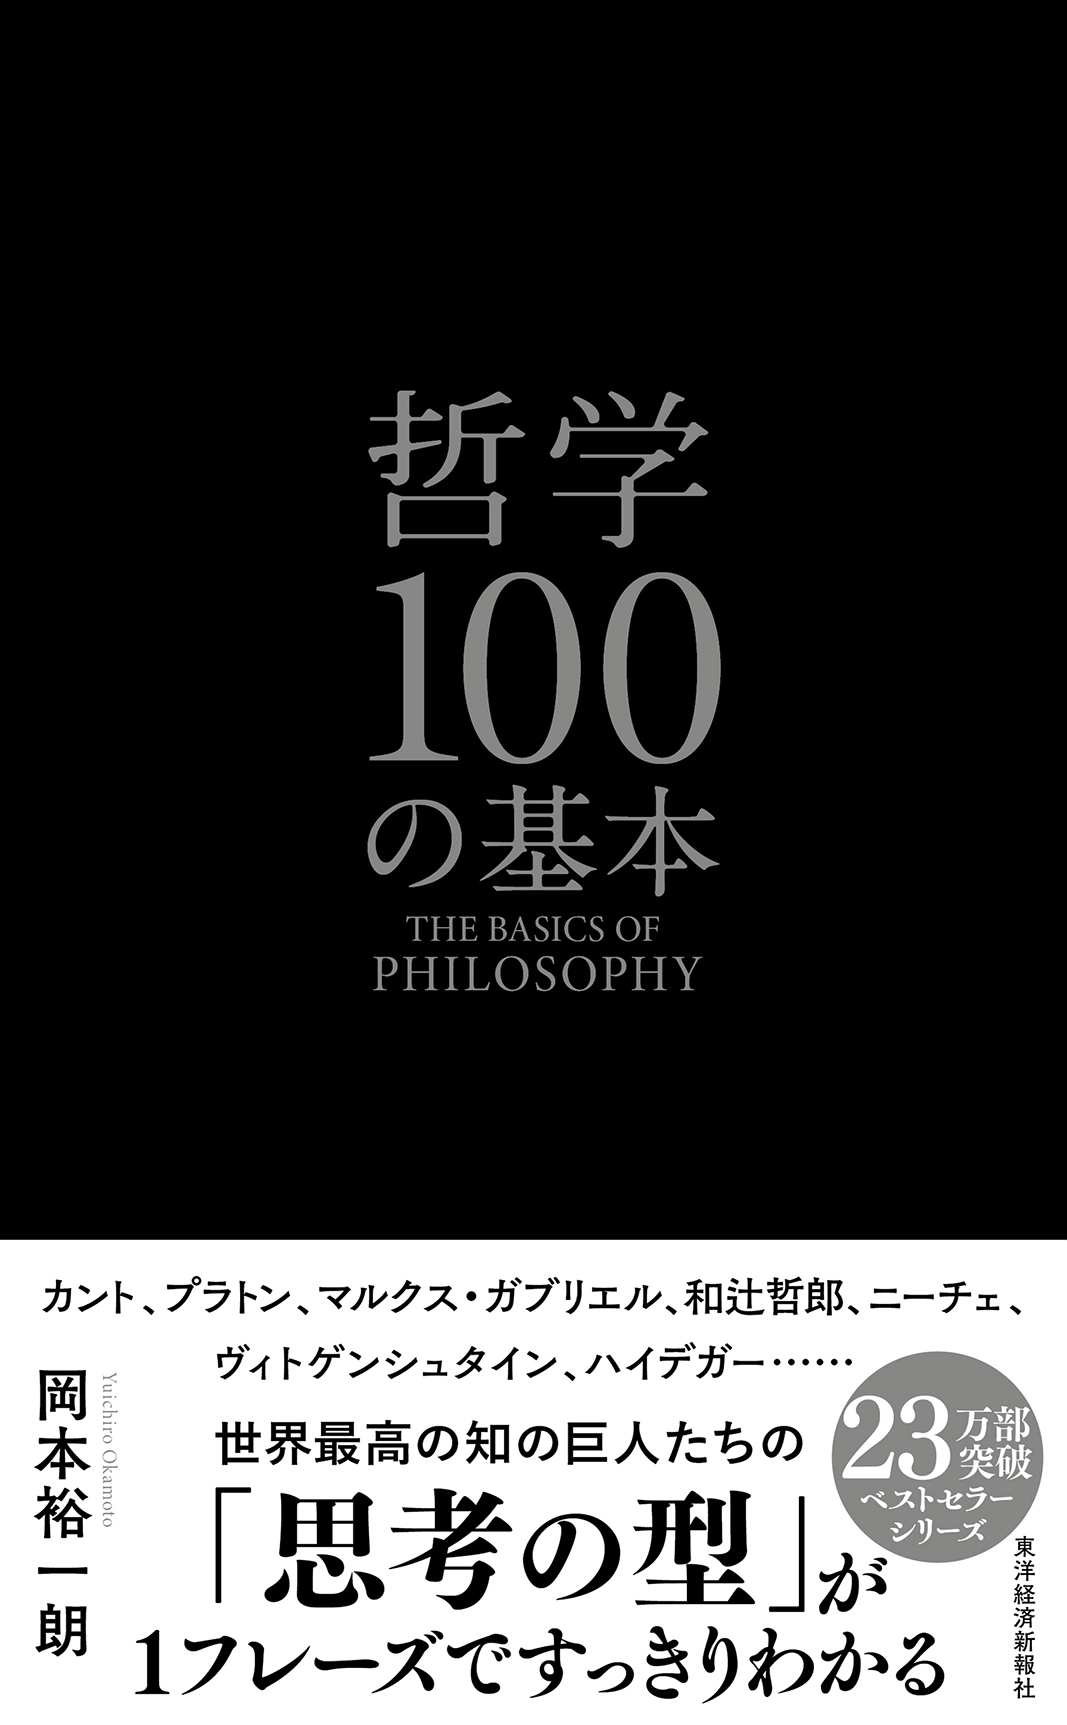 Philosophy 100 Basics